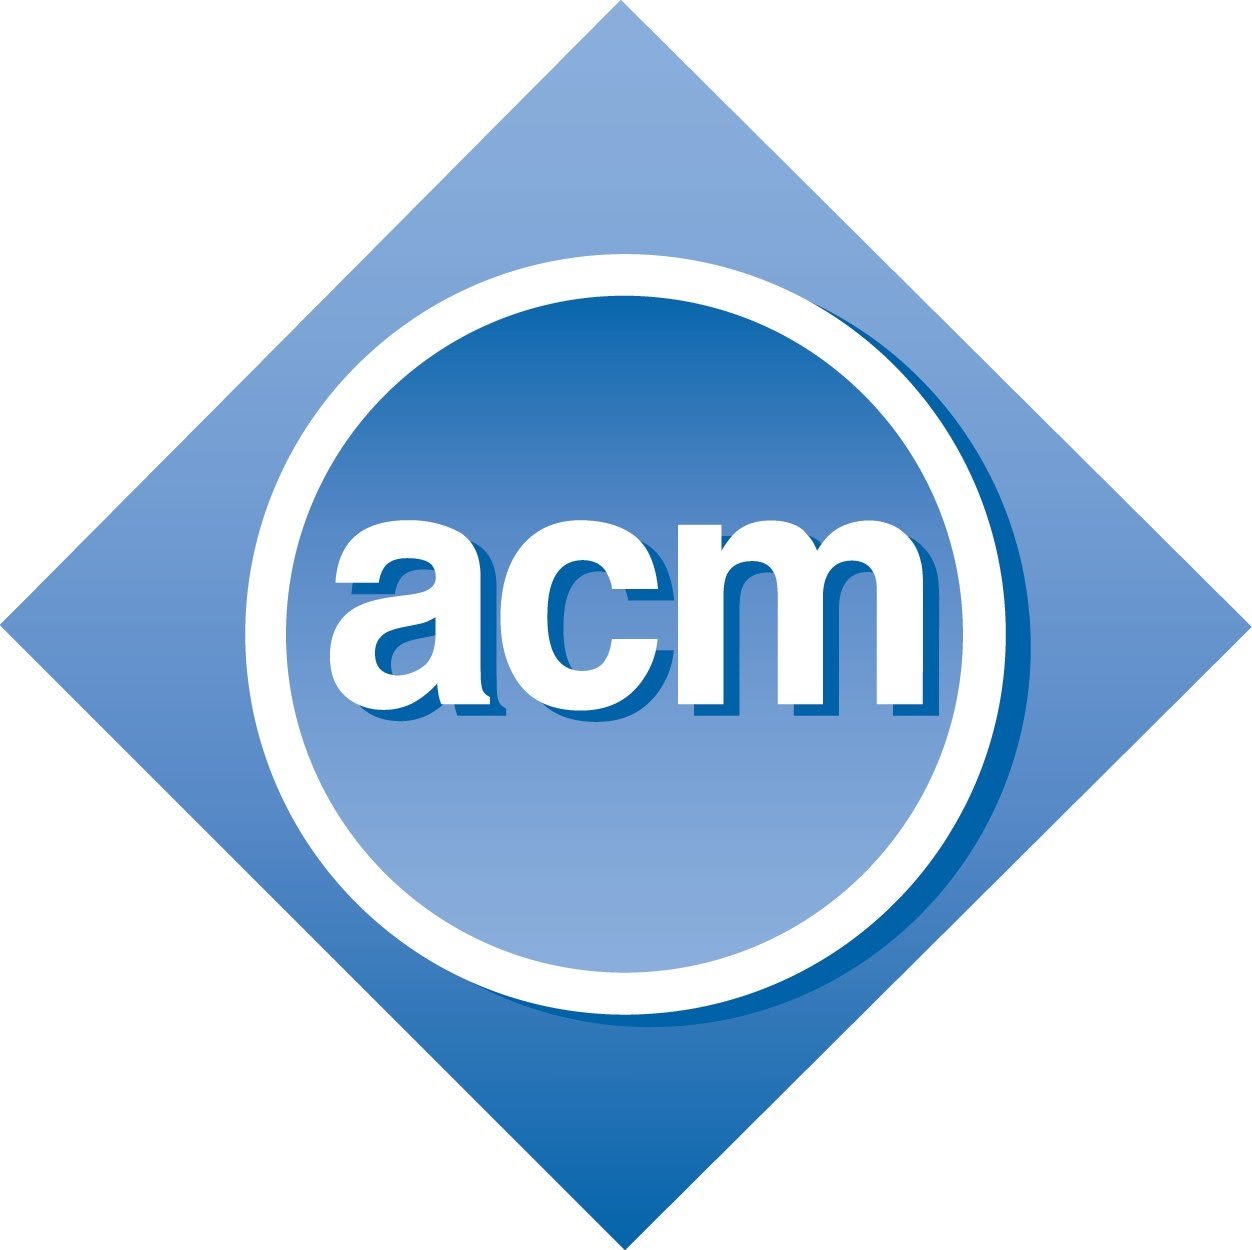 Association for Computation Machinery